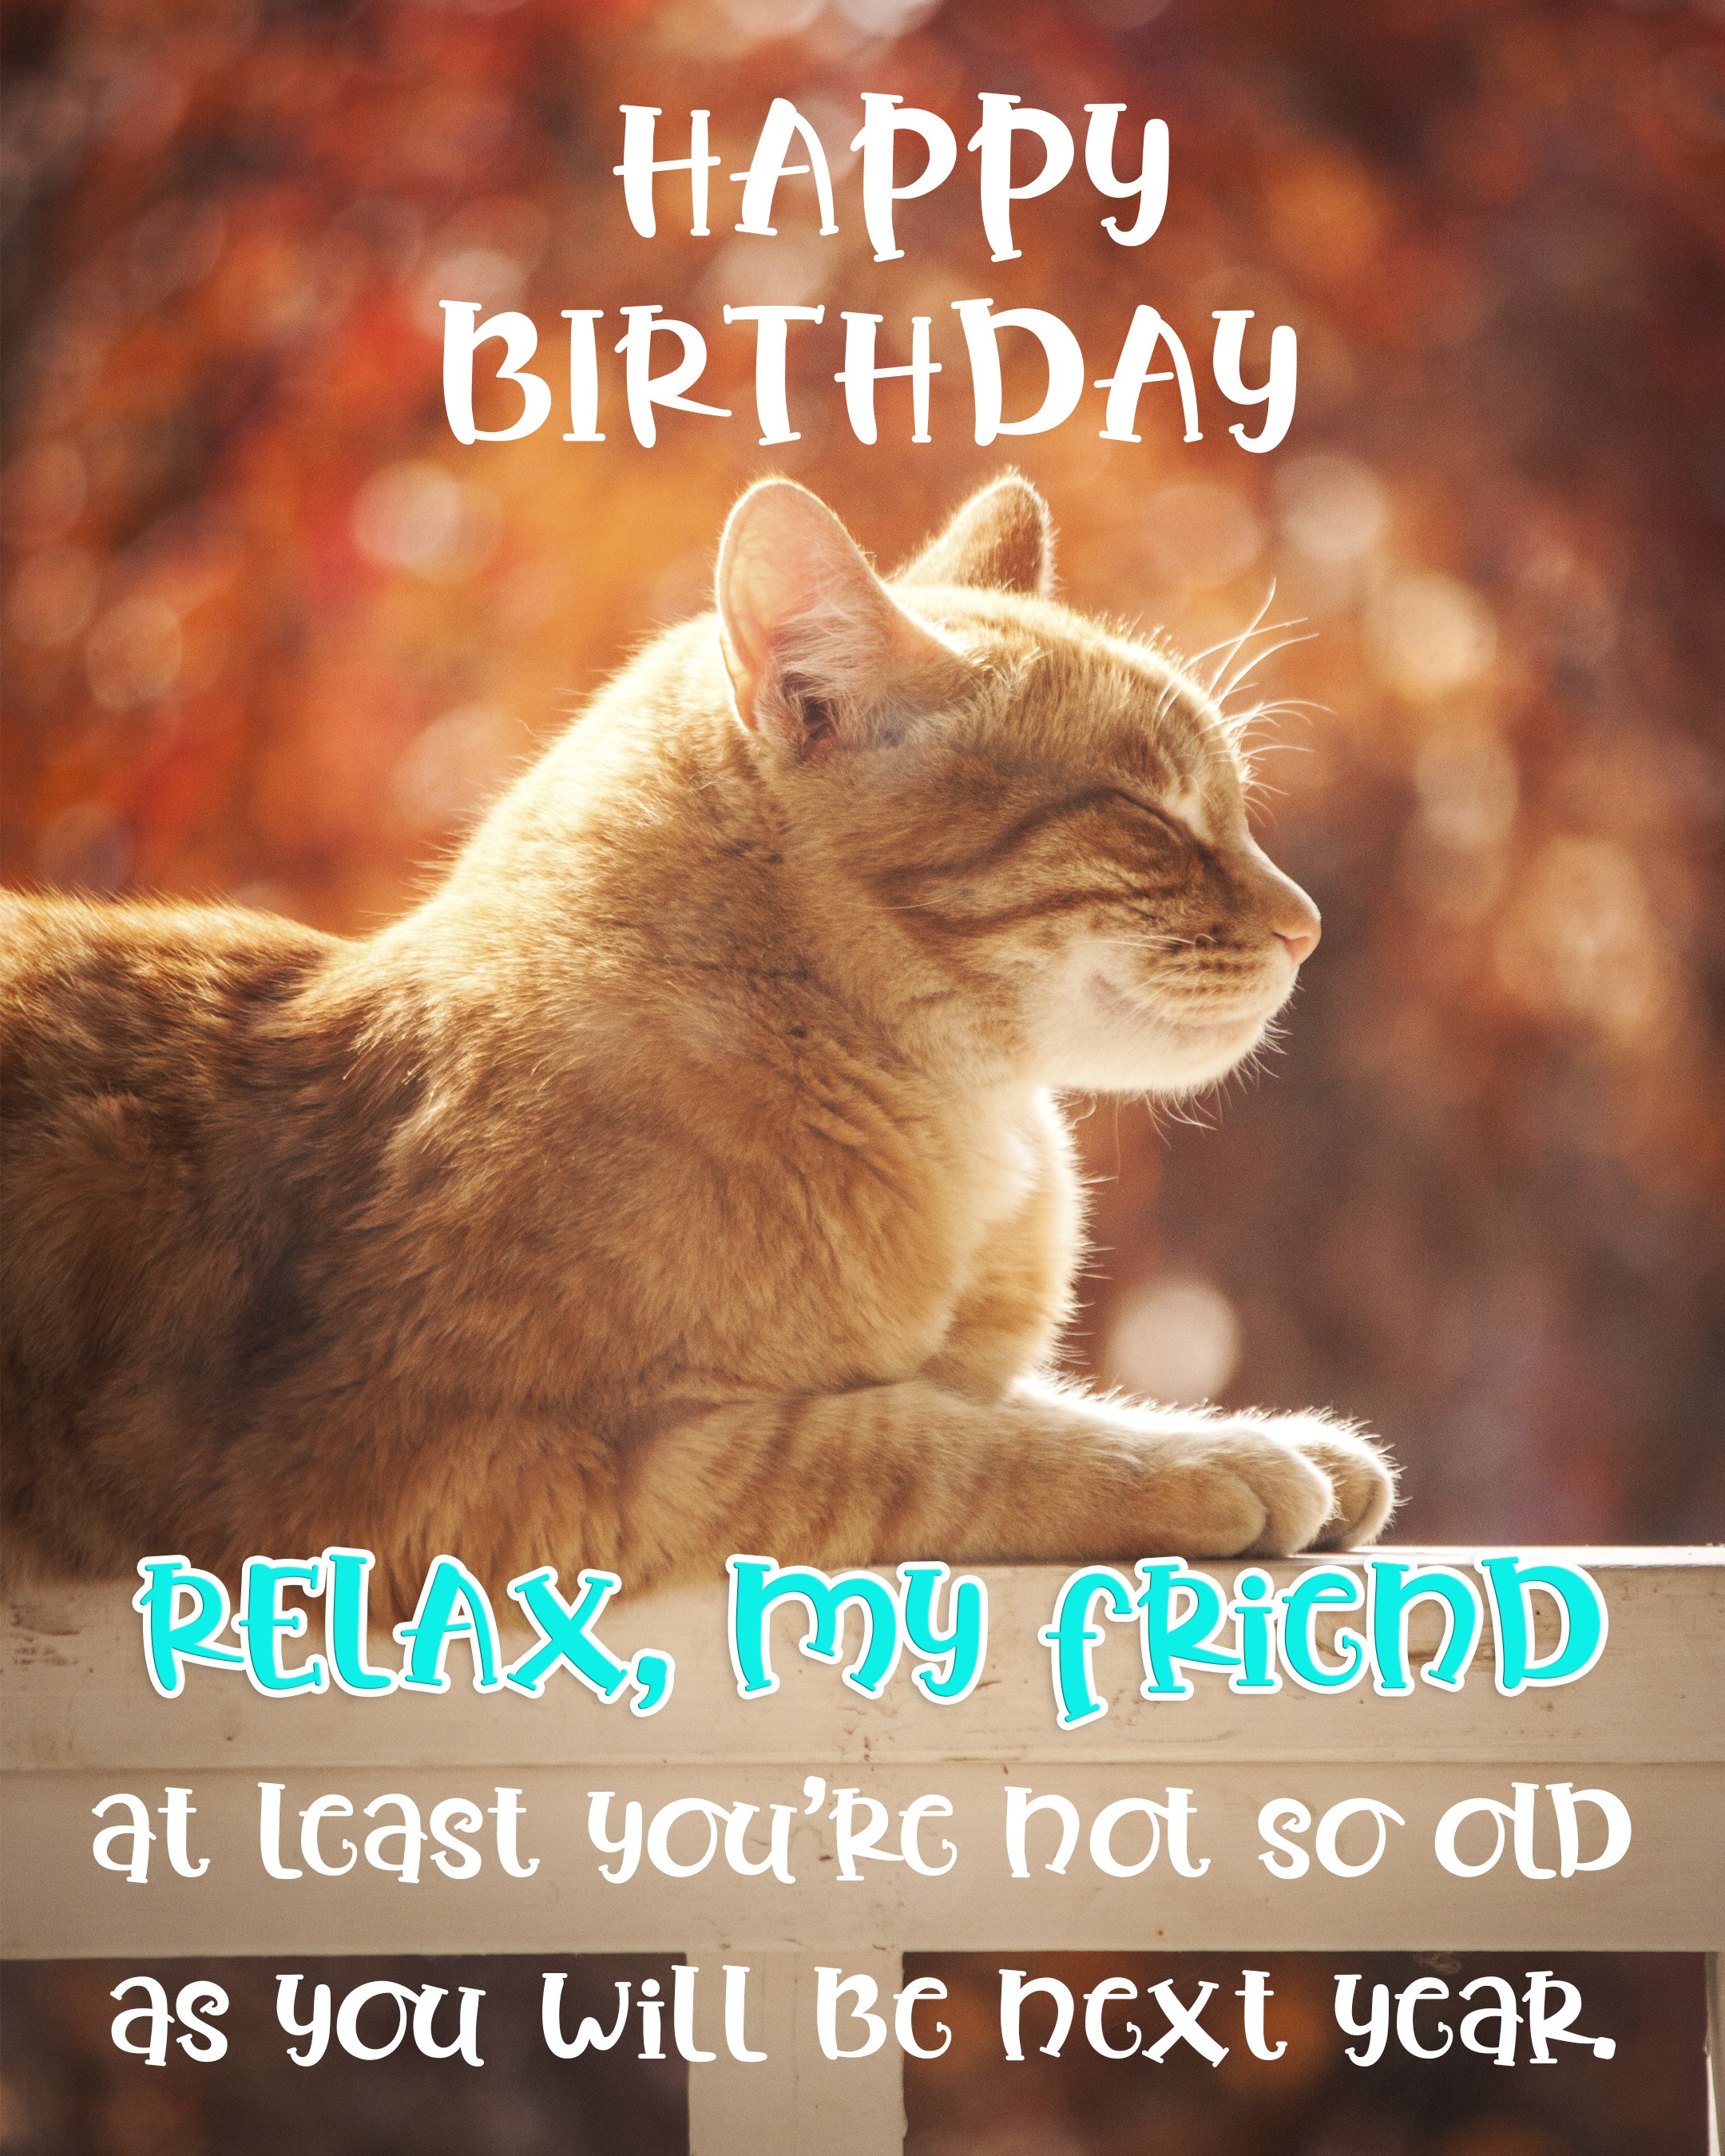 Free Friend Happy Birthday Image With Funny Cat - birthdayimg.com